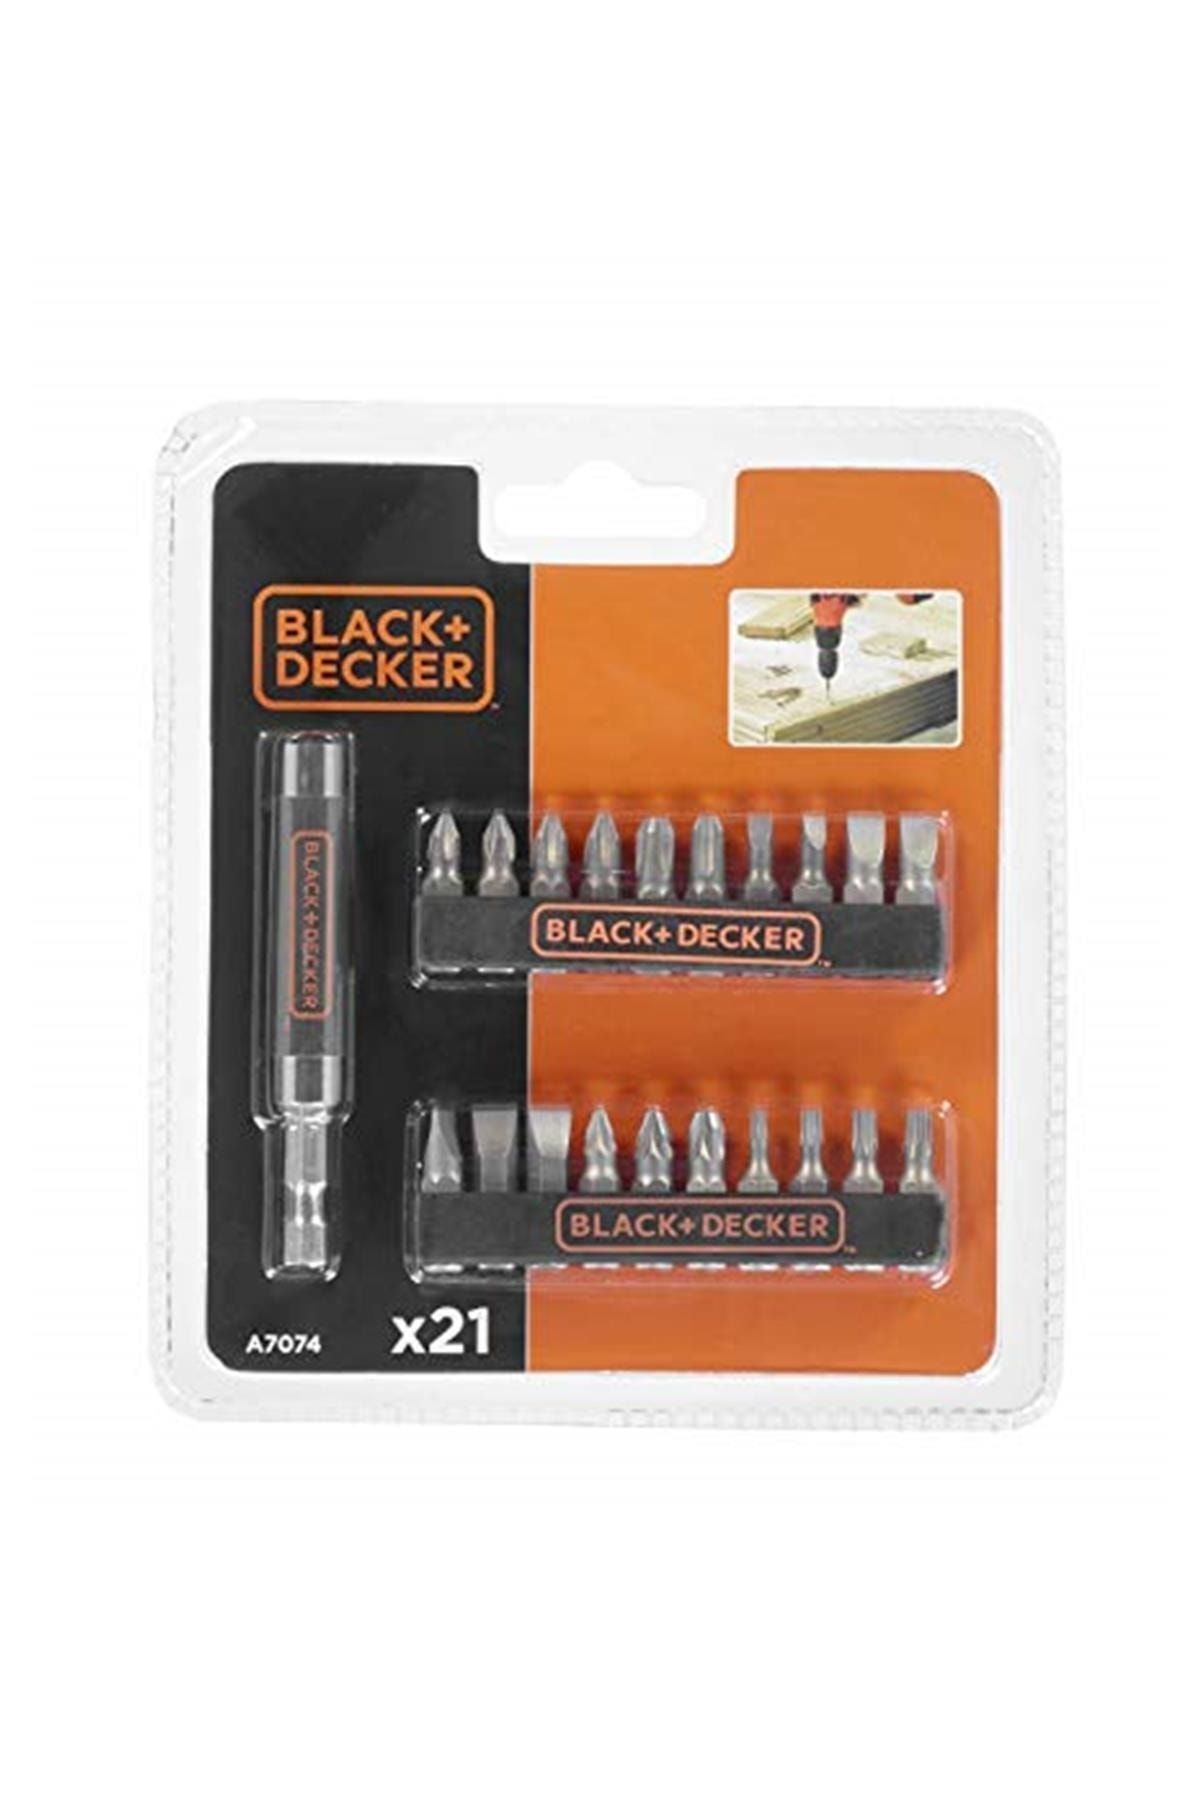 Black Decker Black & Decker A7074 Aksesuar Set, Gümüş, 1 Adet